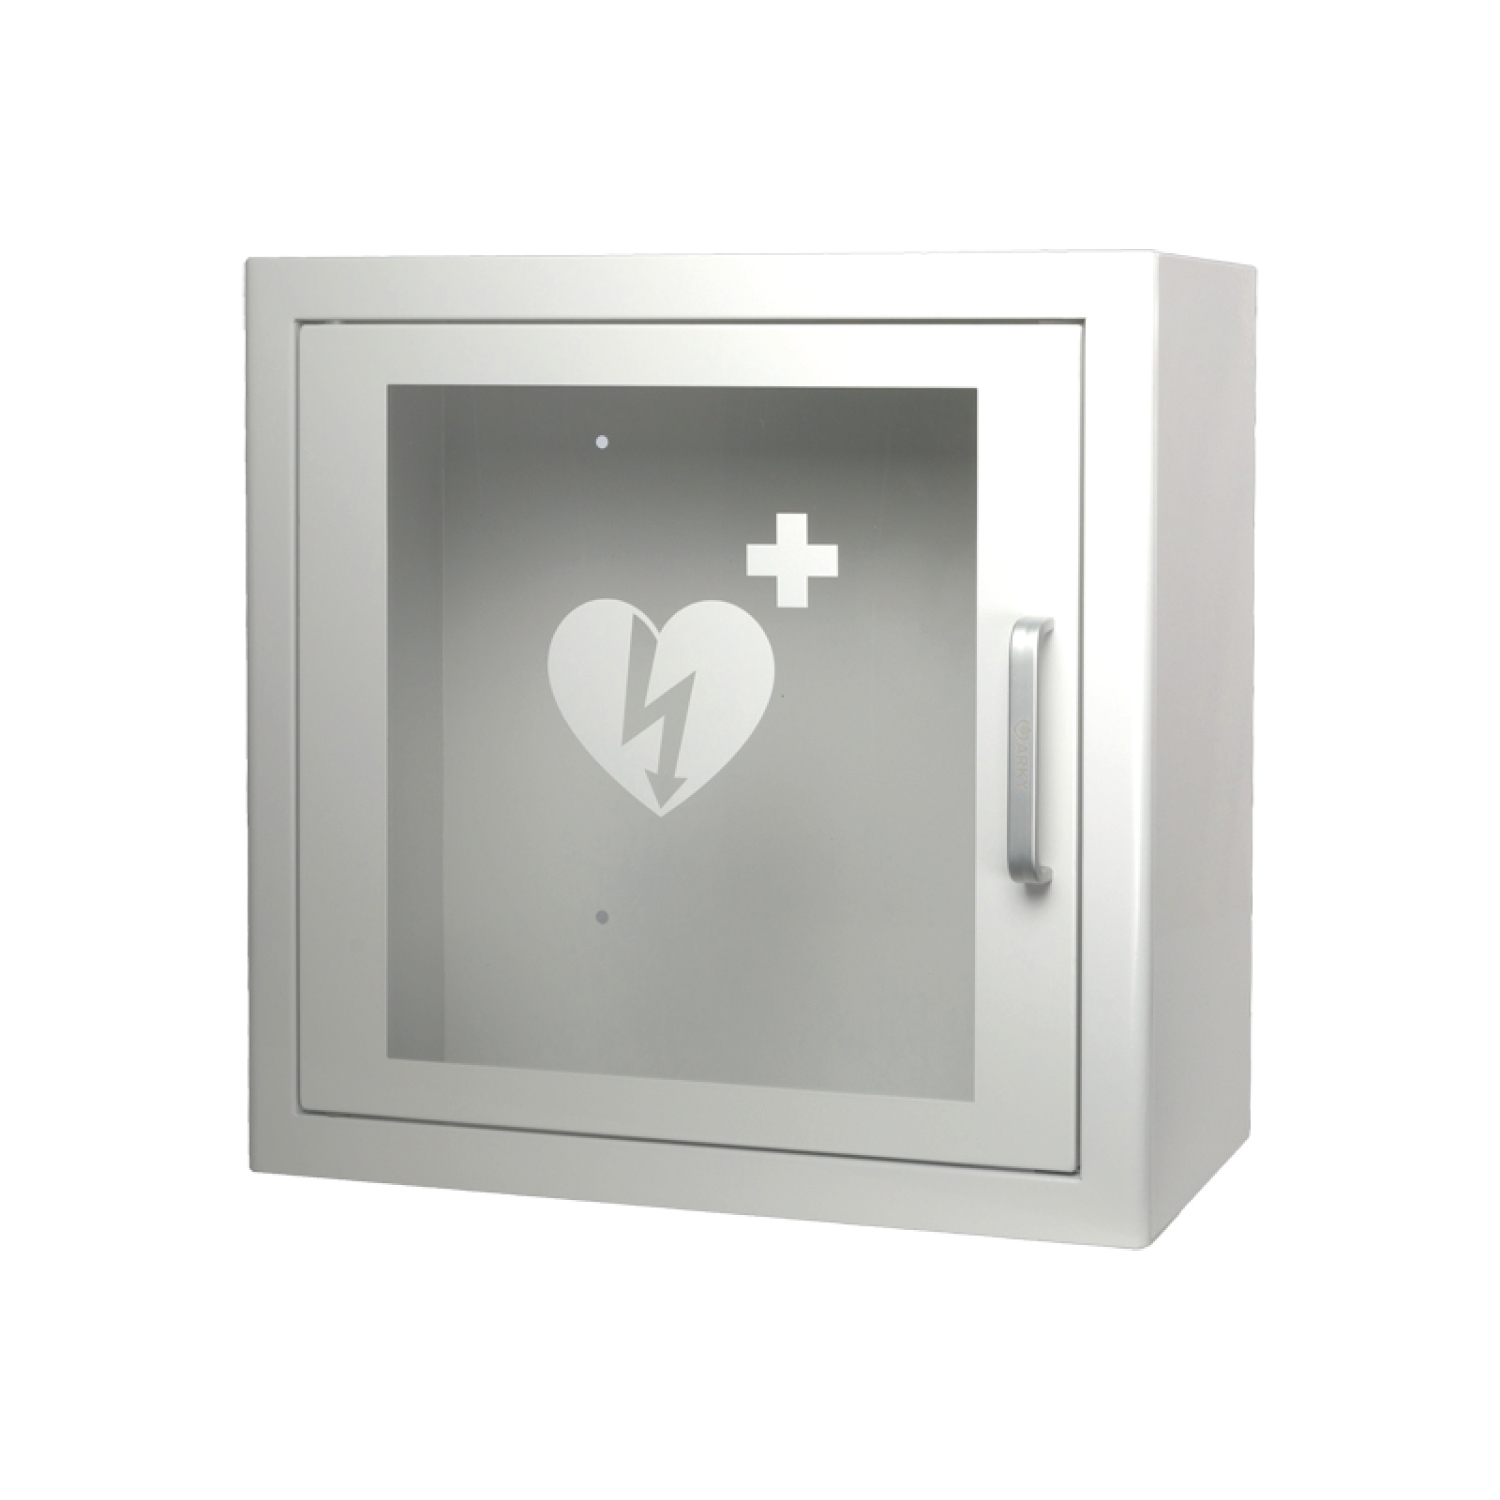 AED kast binnenshuis Heartsine defibrillator - wit